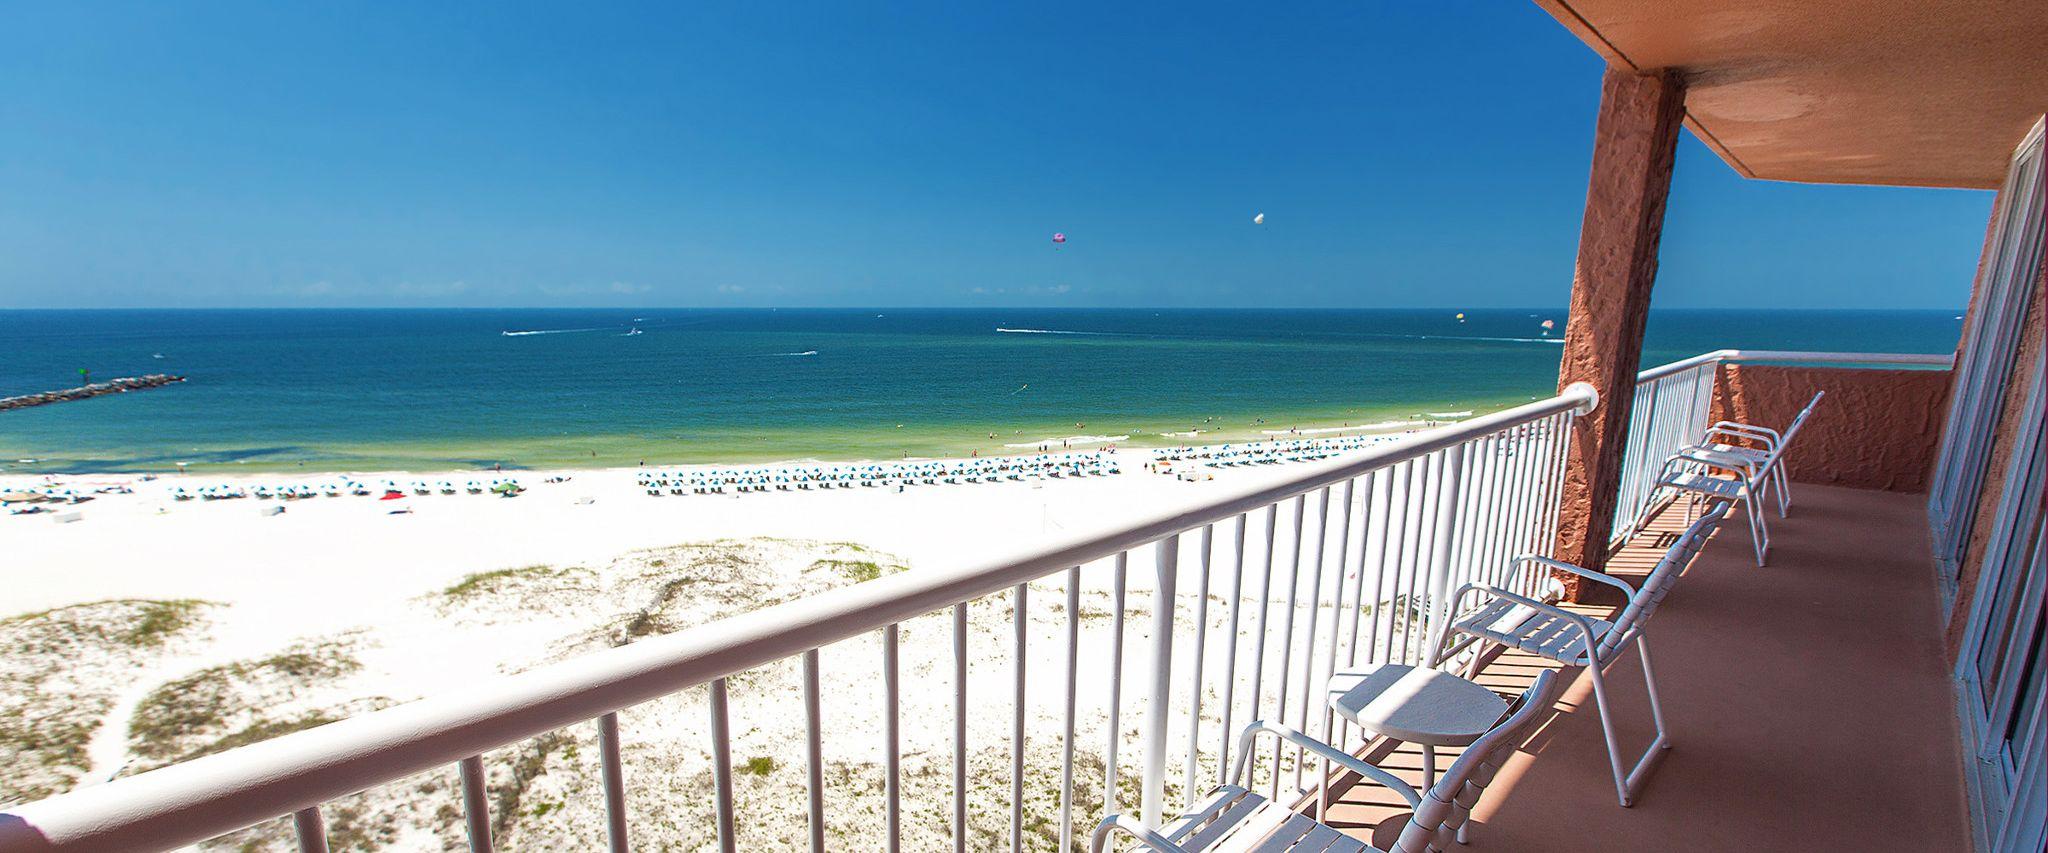 Hotel balcony overlooking Alabama's beaches